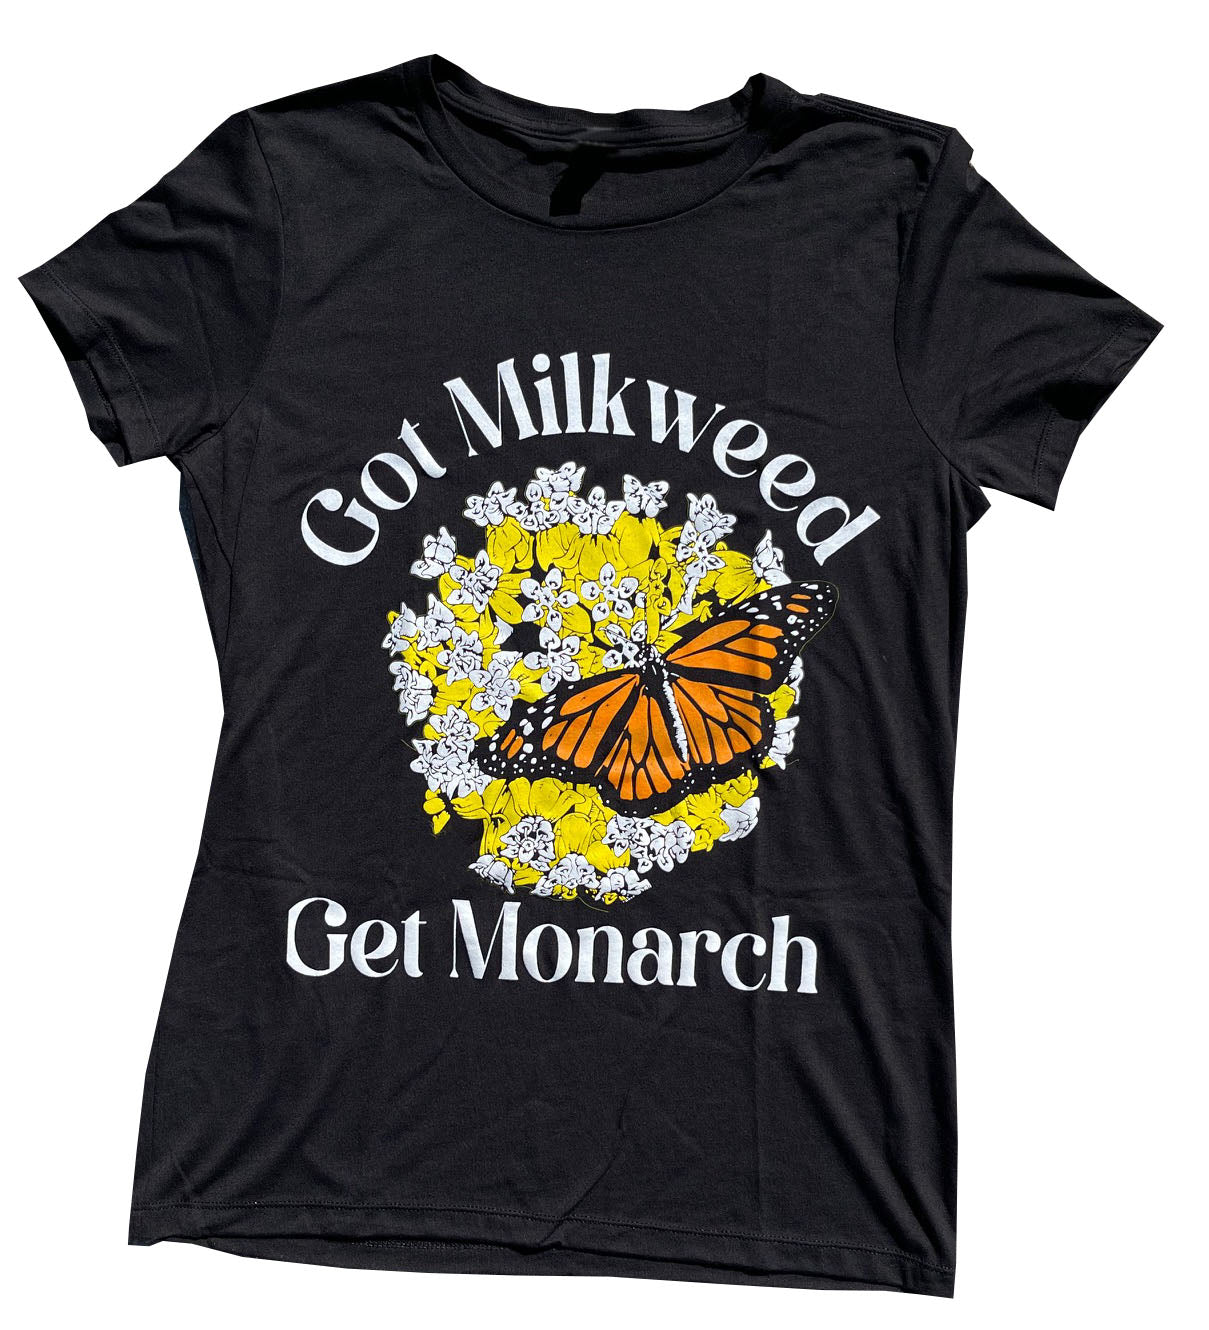 Got Monarch tee